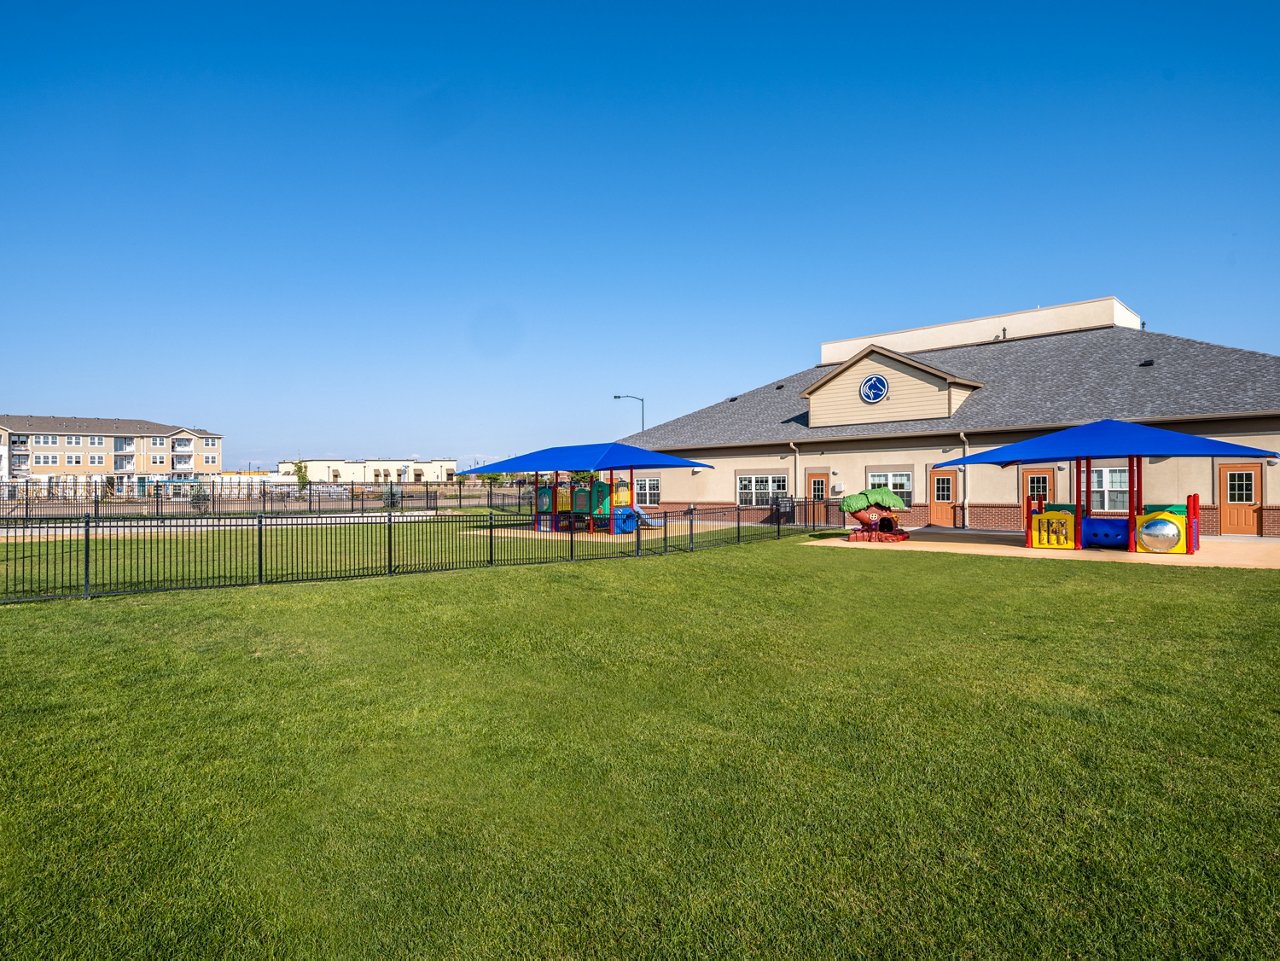 Playground of the Goddard School in Reunion Colorado